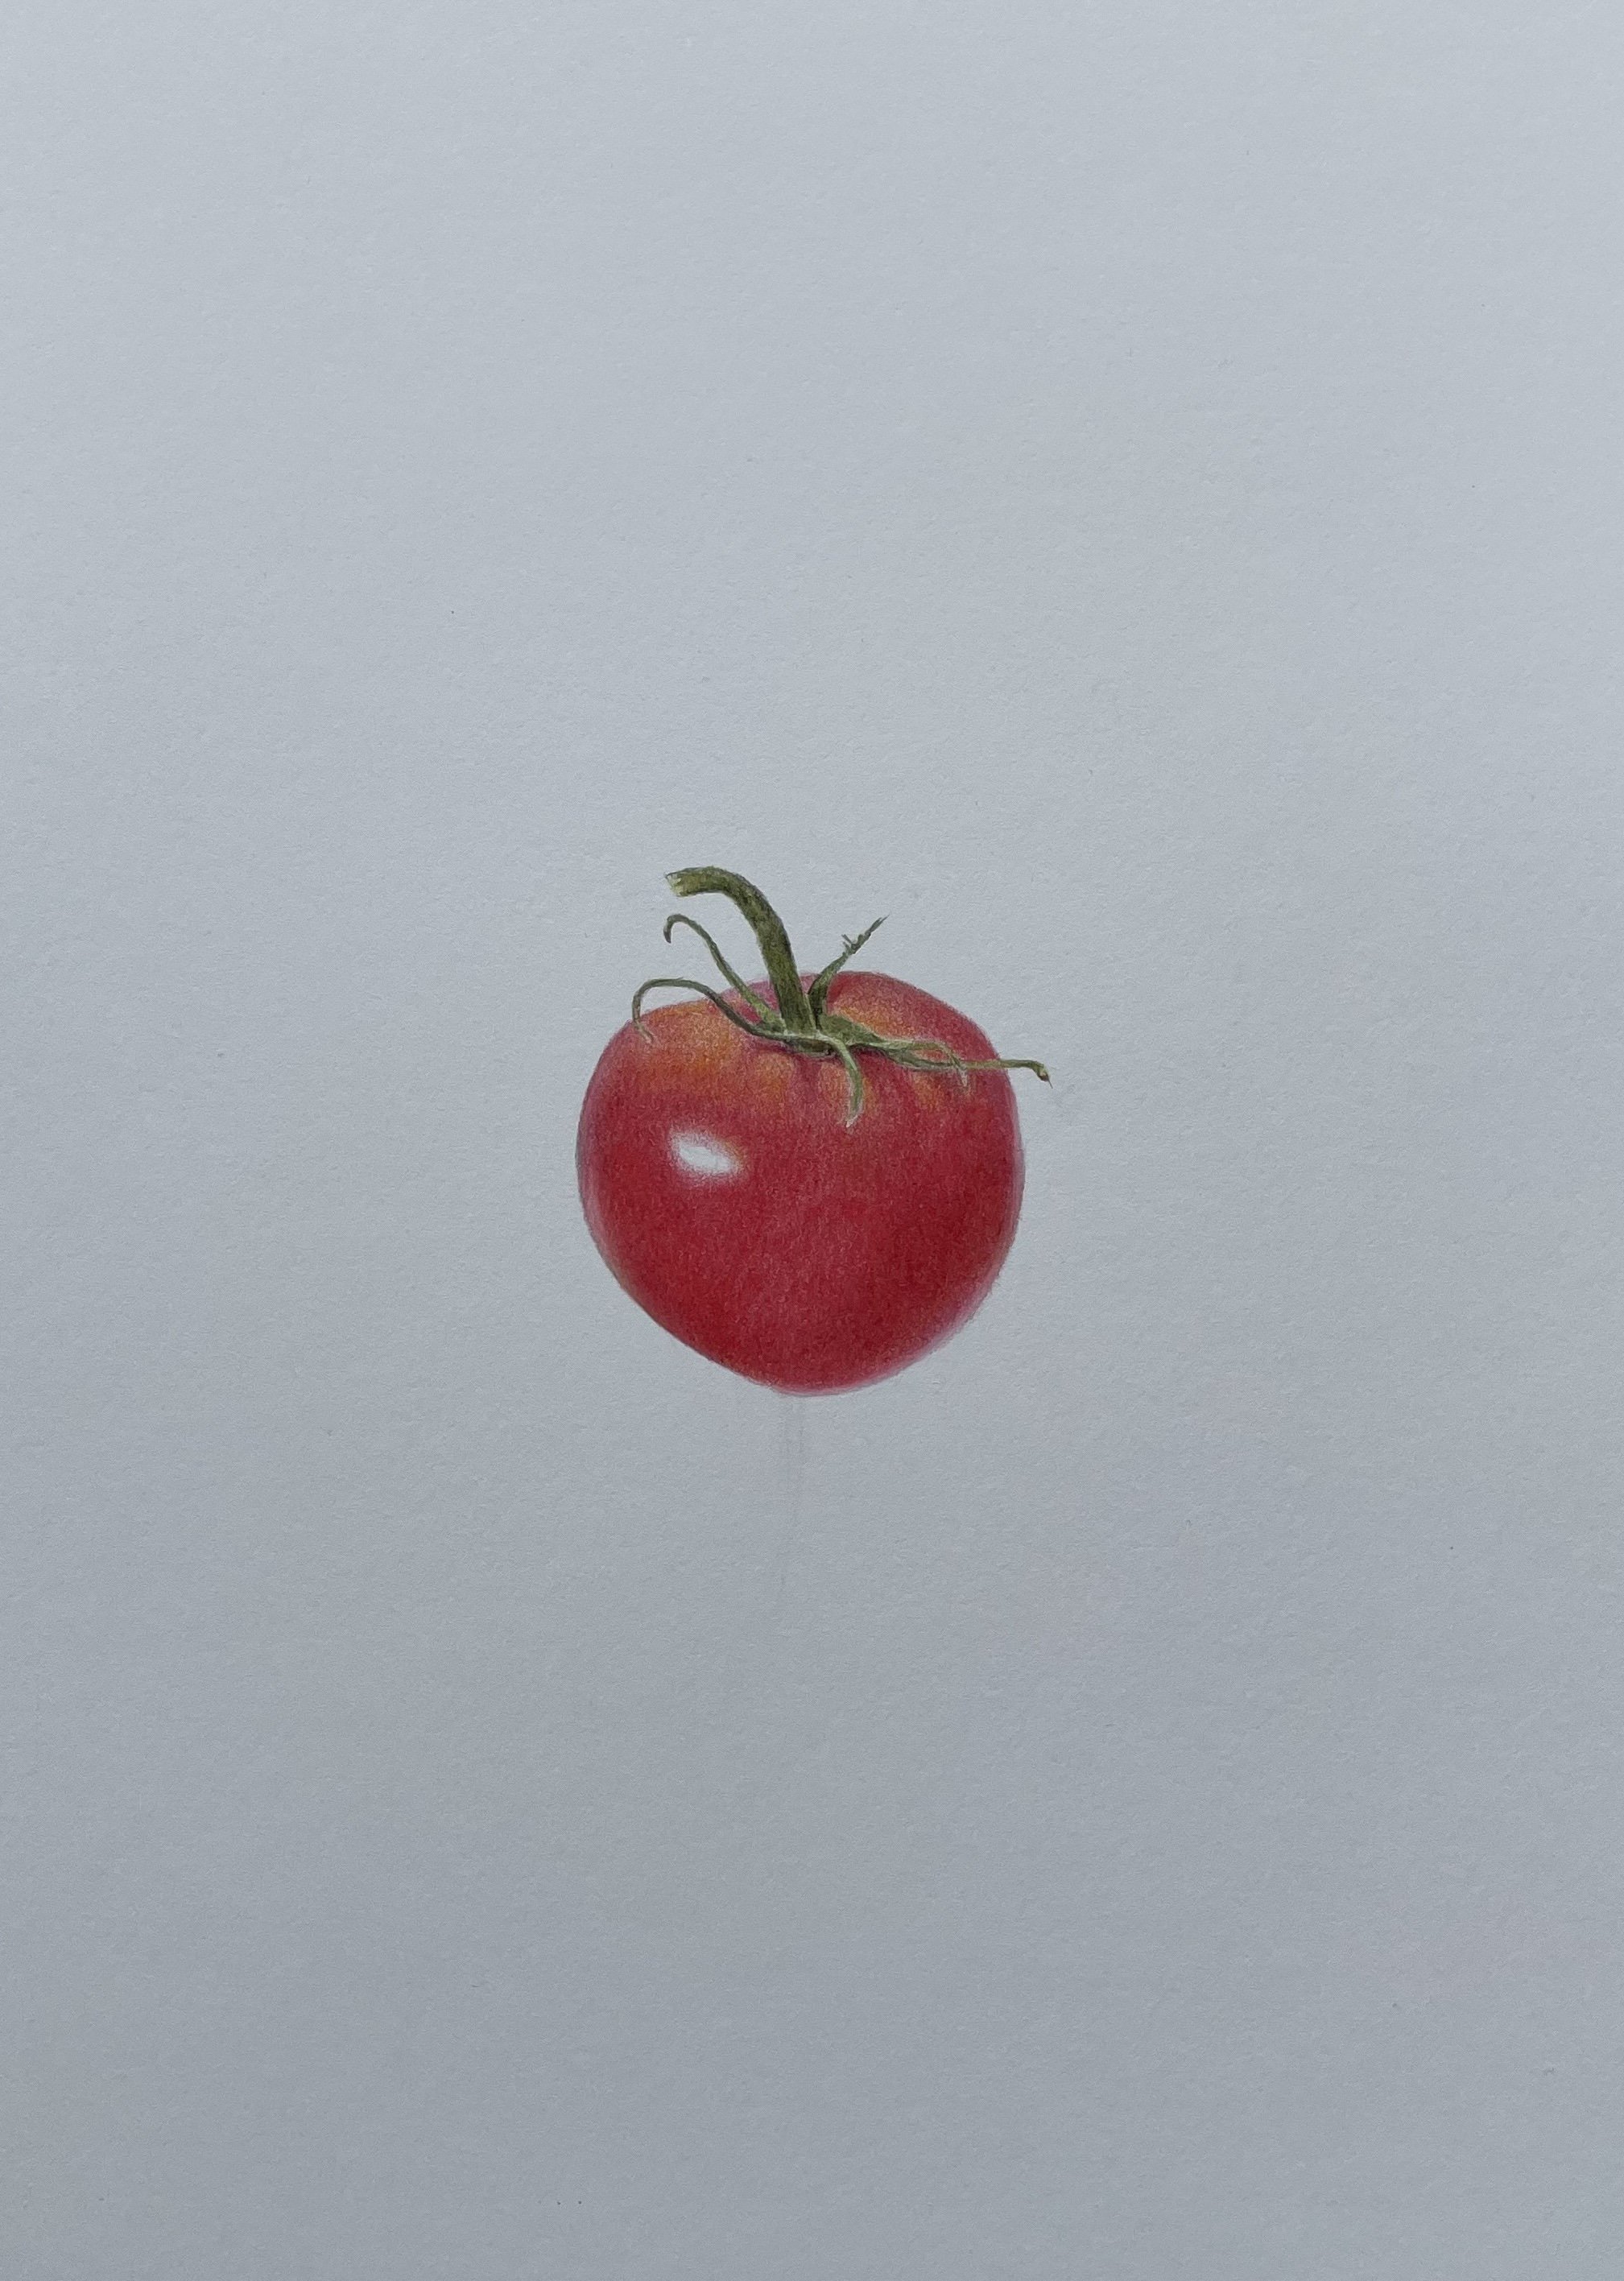   Tomato   Colored pencil on paper  10 in x 14 in 